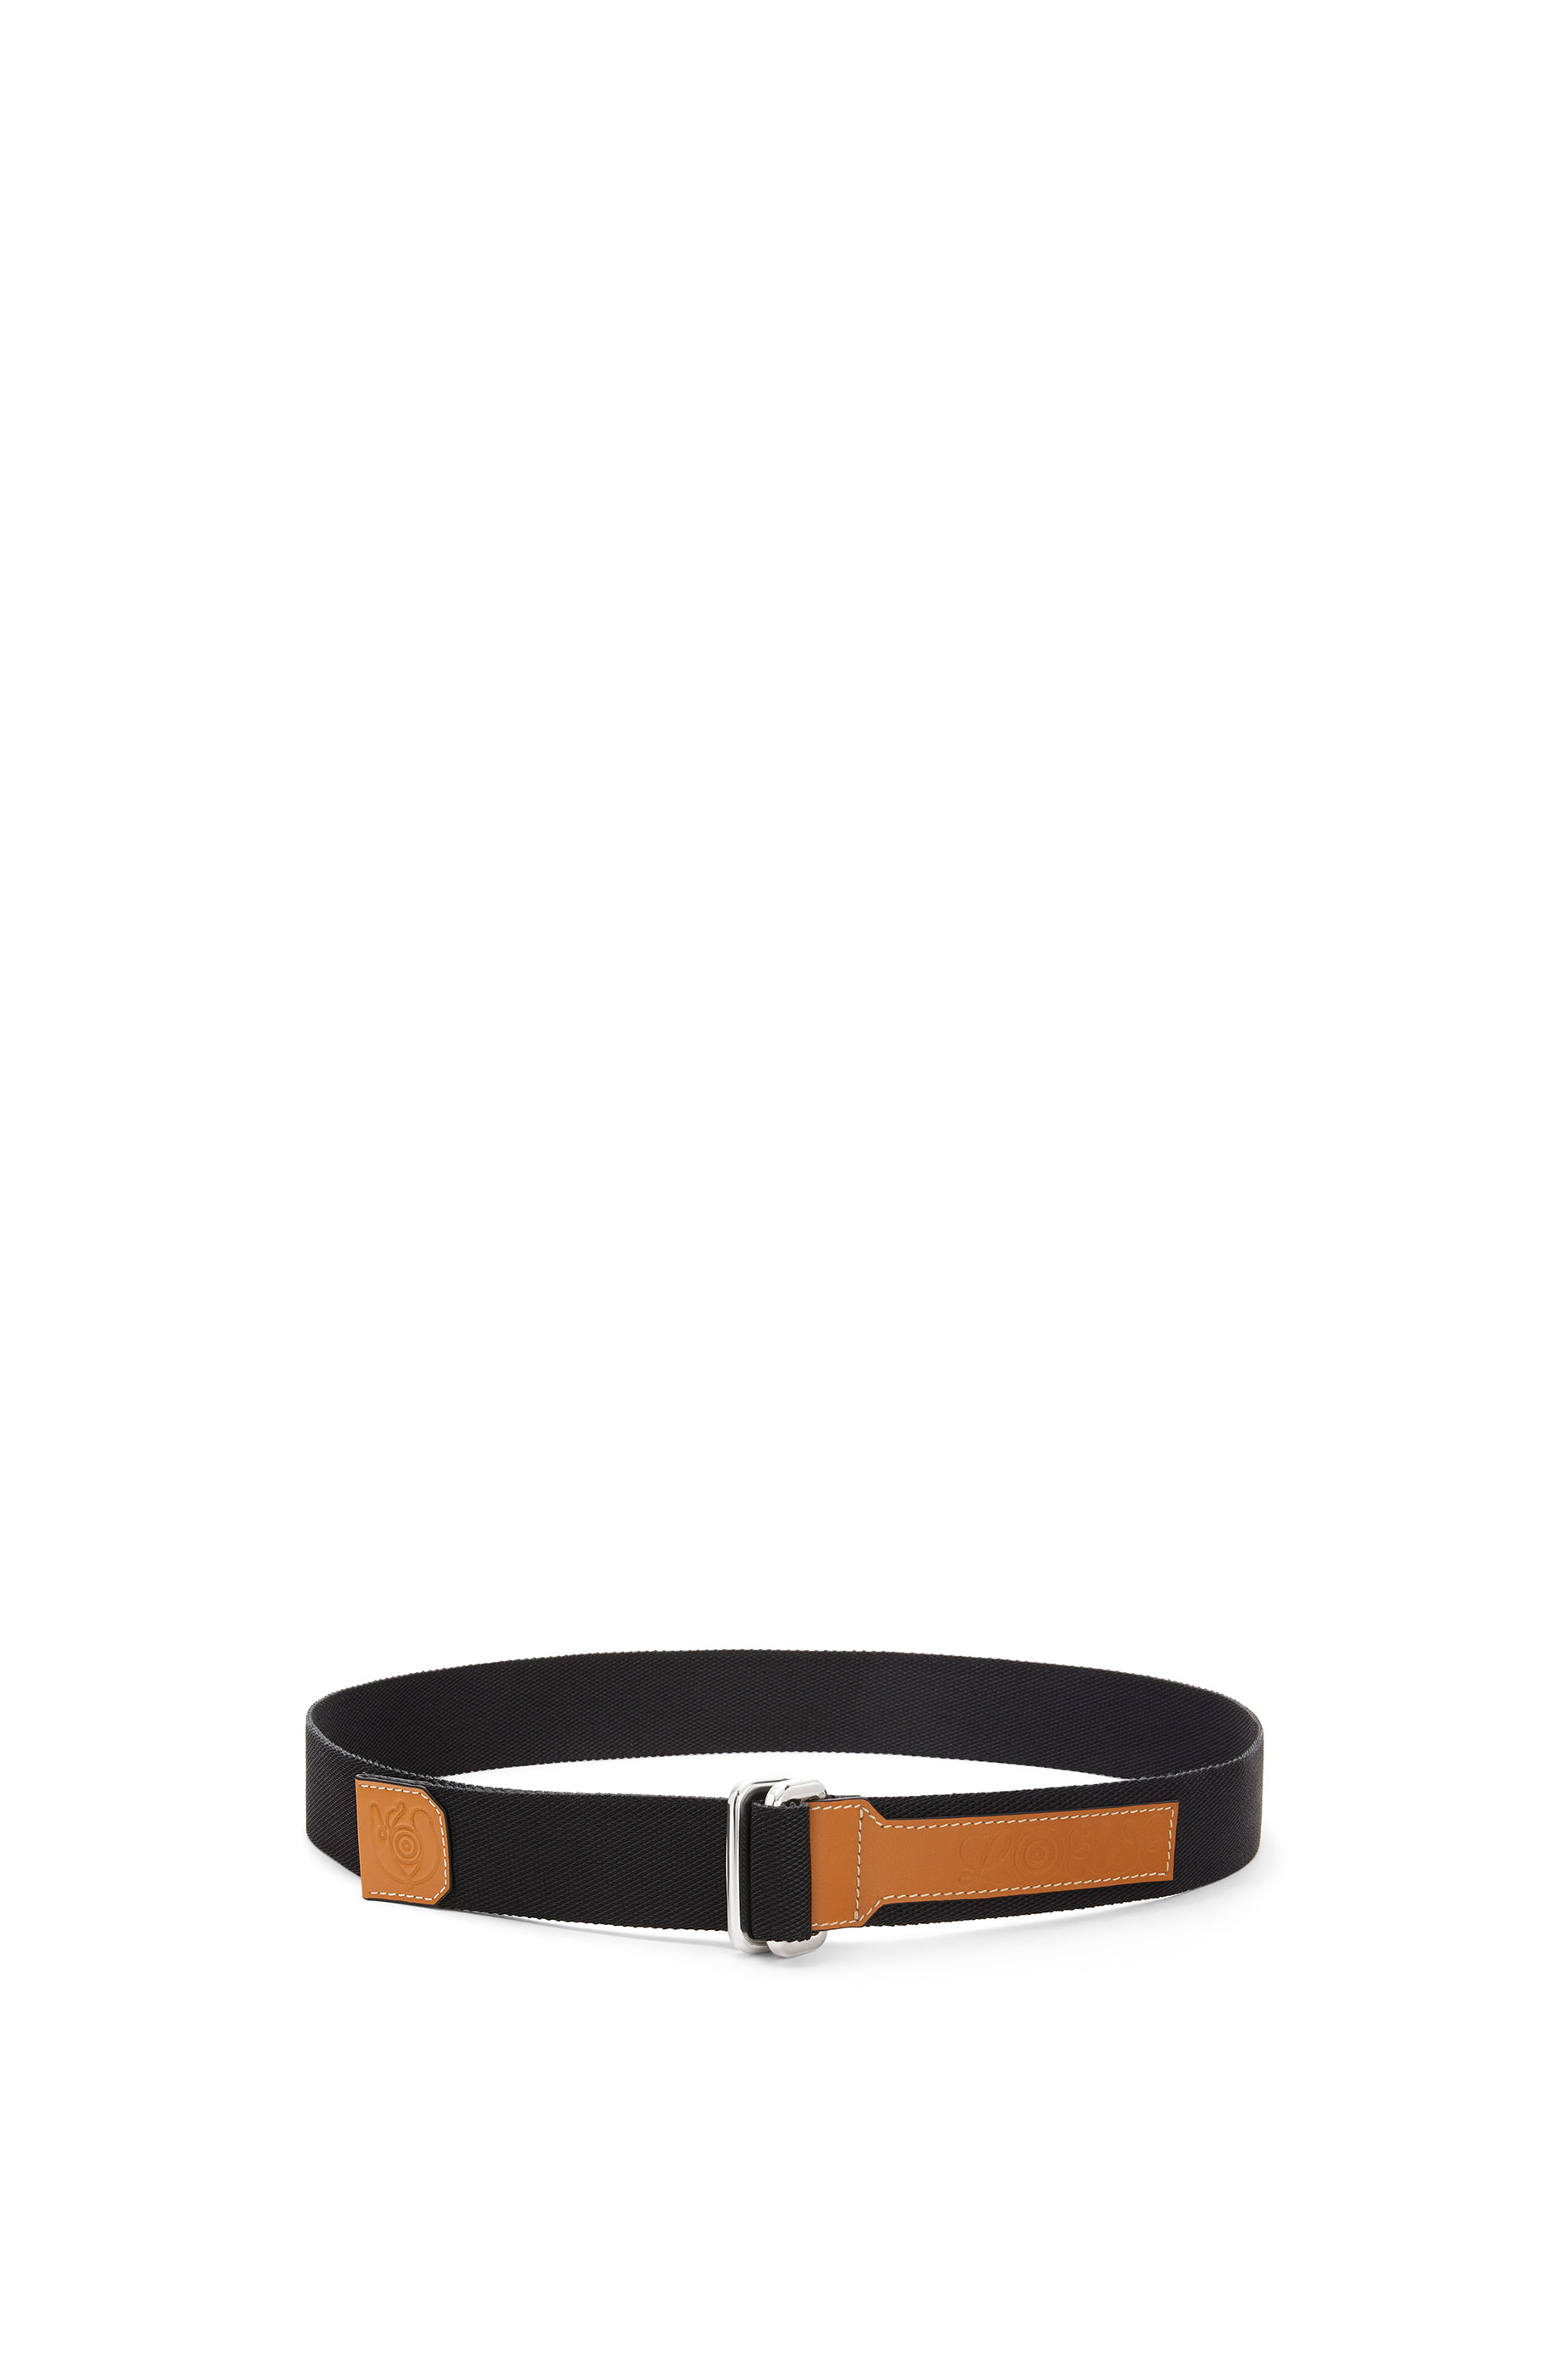 Luxury belts for men - LOEWE Official Site